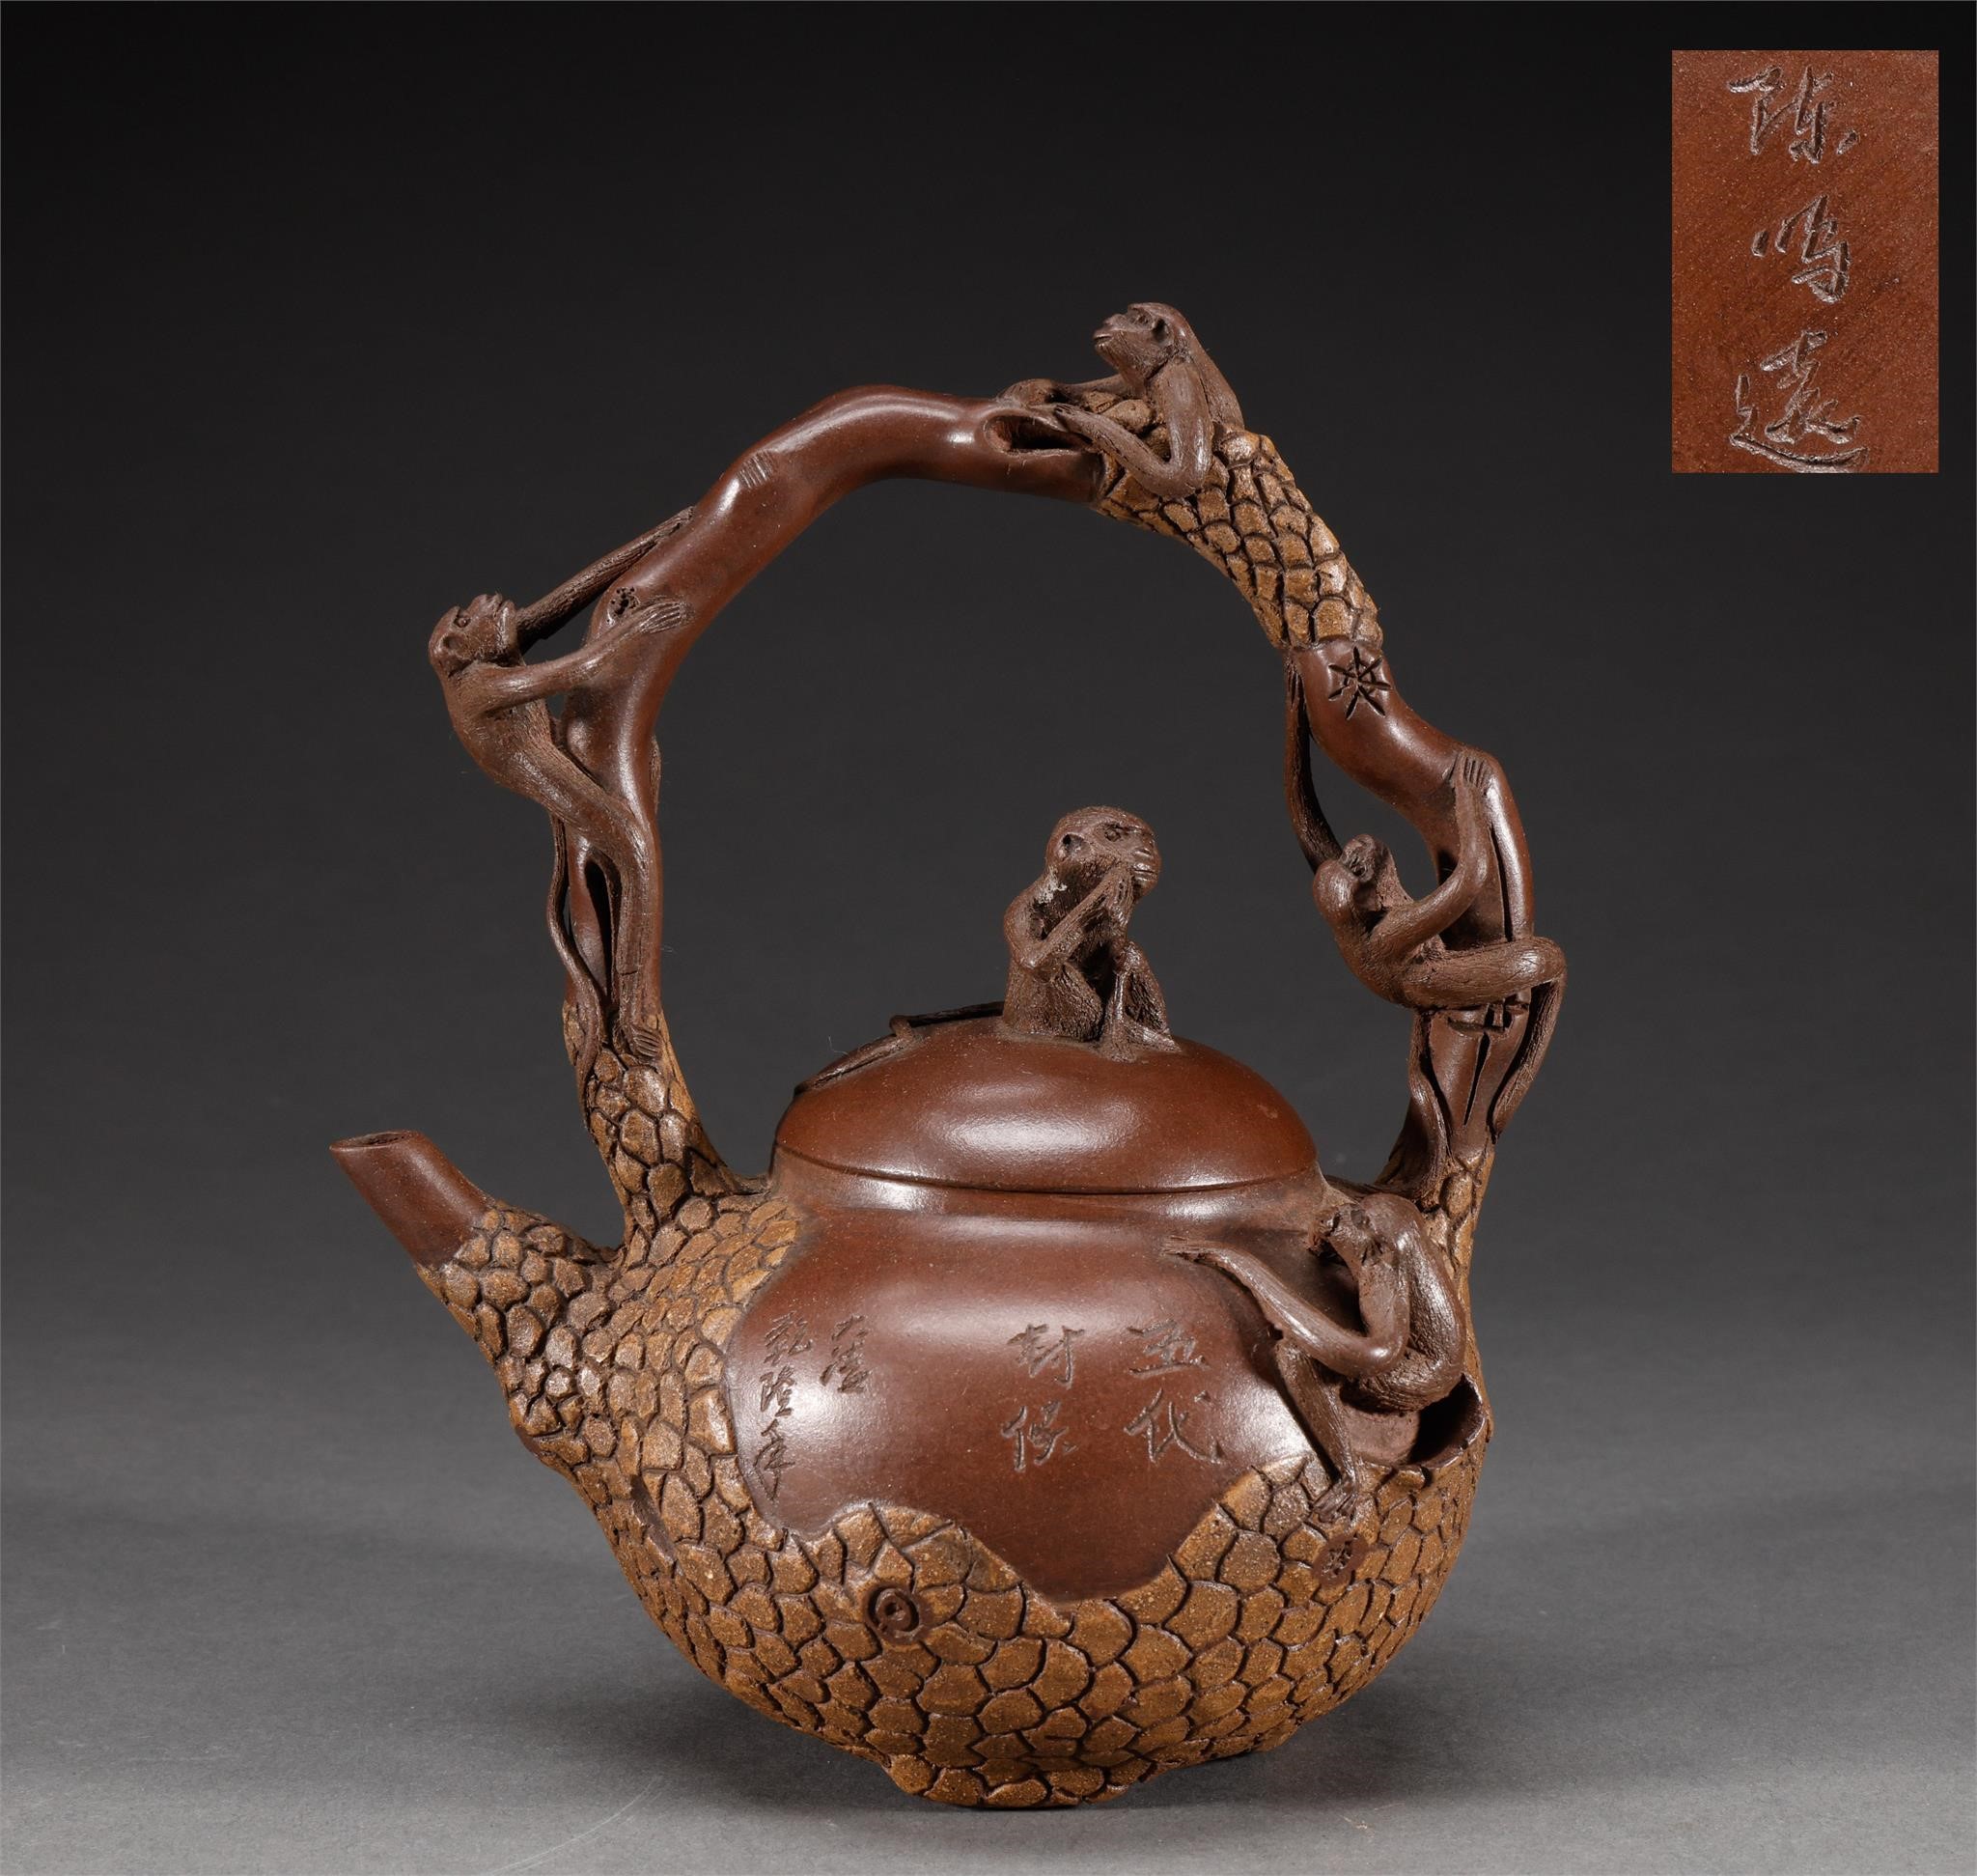 Qing Dynasty purple clay pot